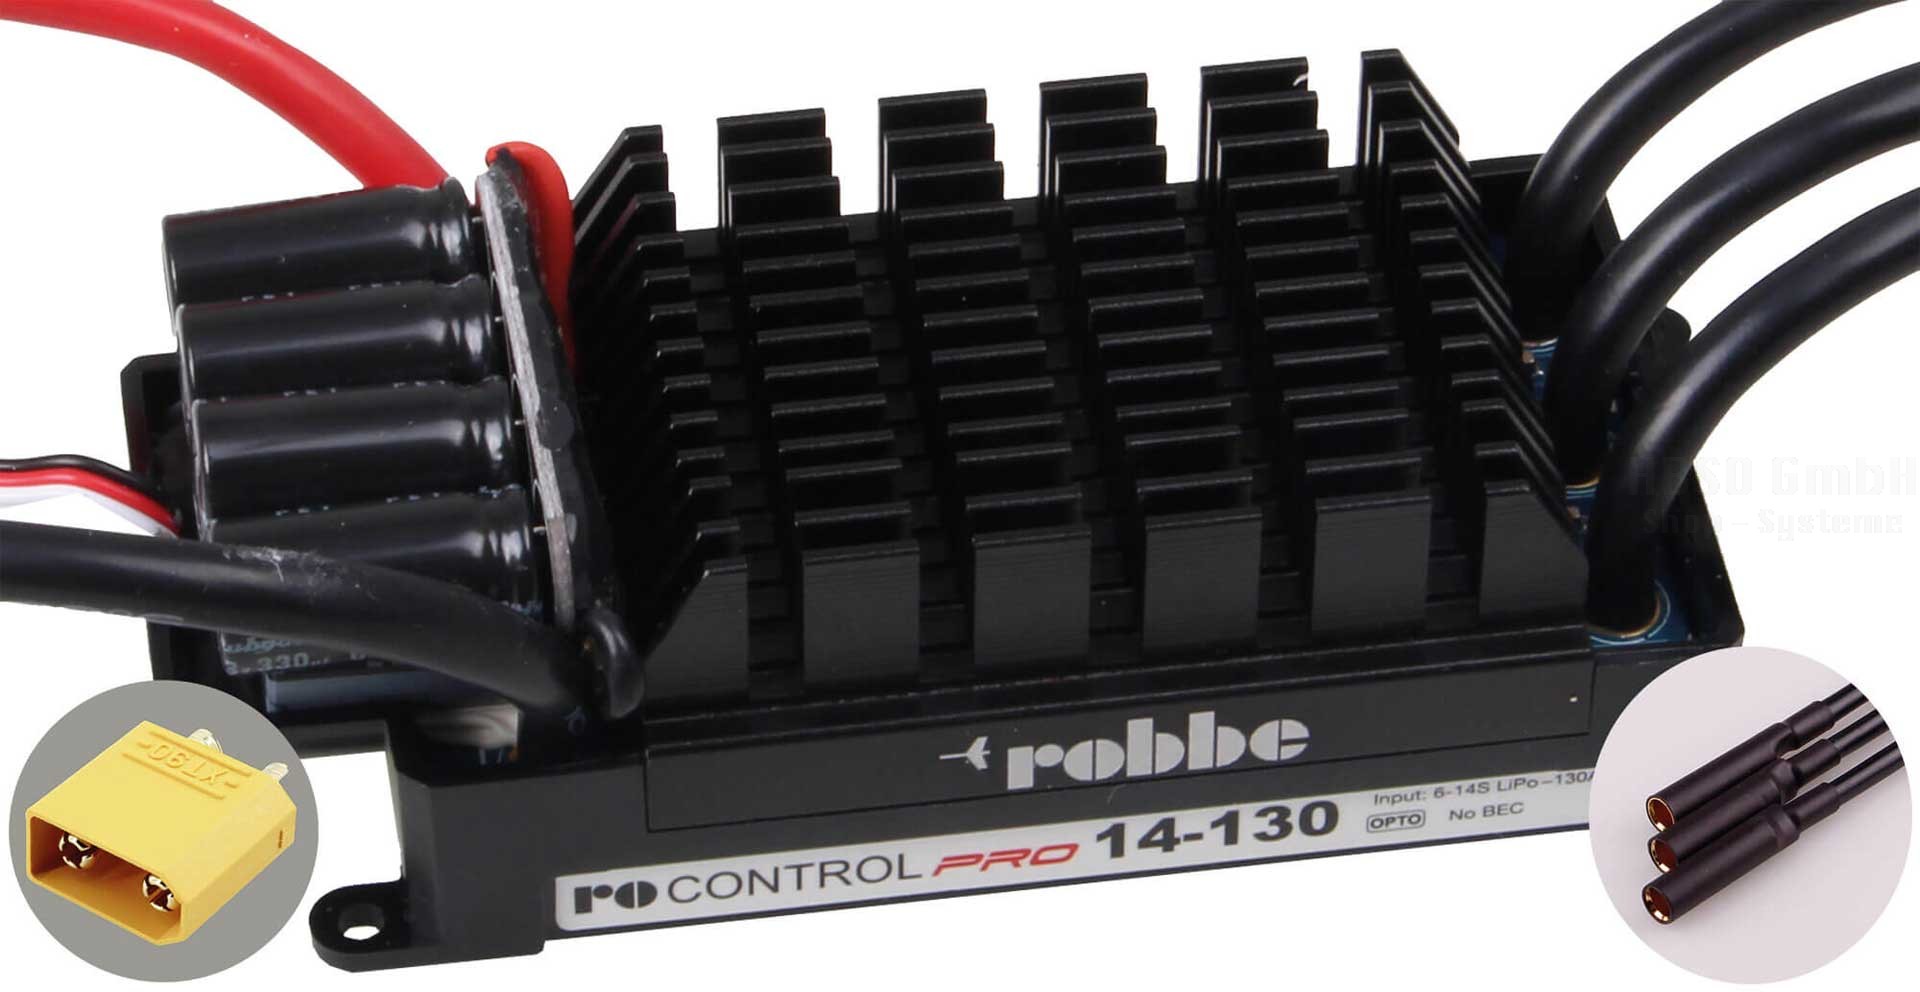 Robbe Modellsport RO-CONTROL PRO 14-130 6-14S -130(160)A OPTO Re